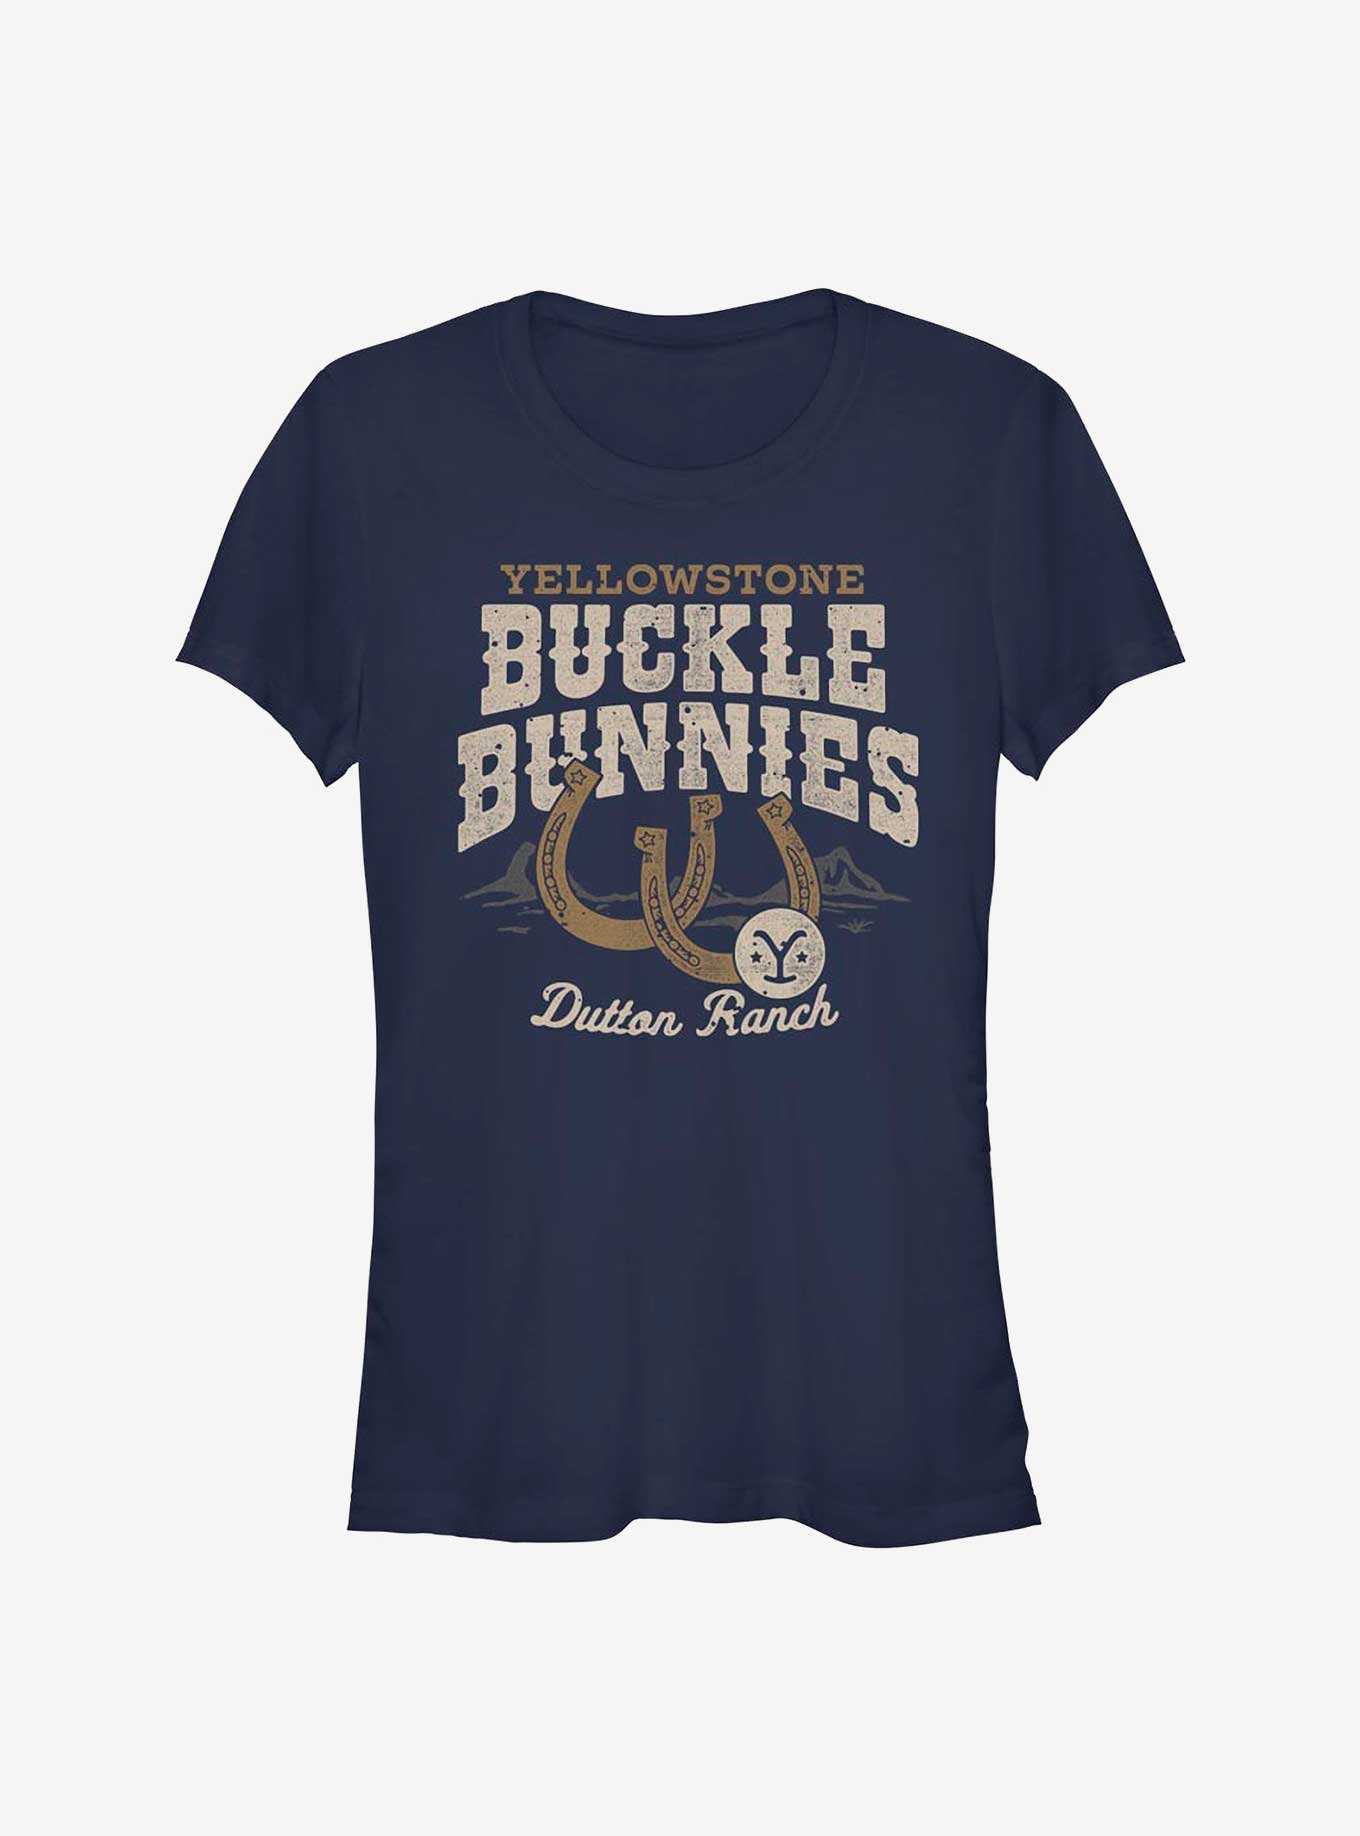 Yellowstone Buckle Bunnies Girls T-Shirt, , hi-res